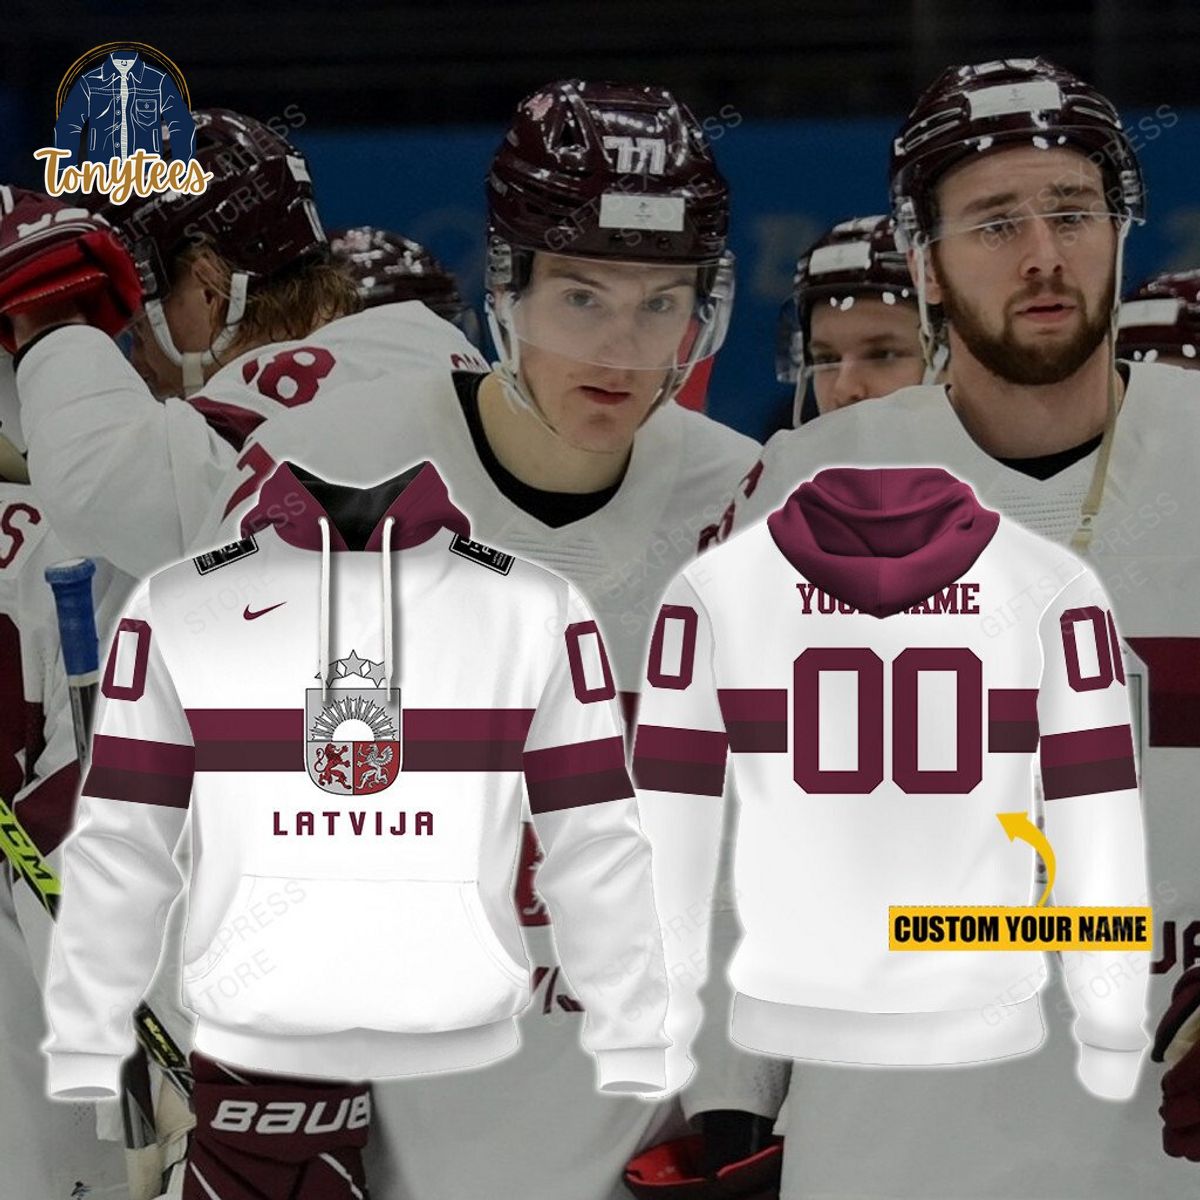 Latvia Ice Hockey Personalized Hoodie